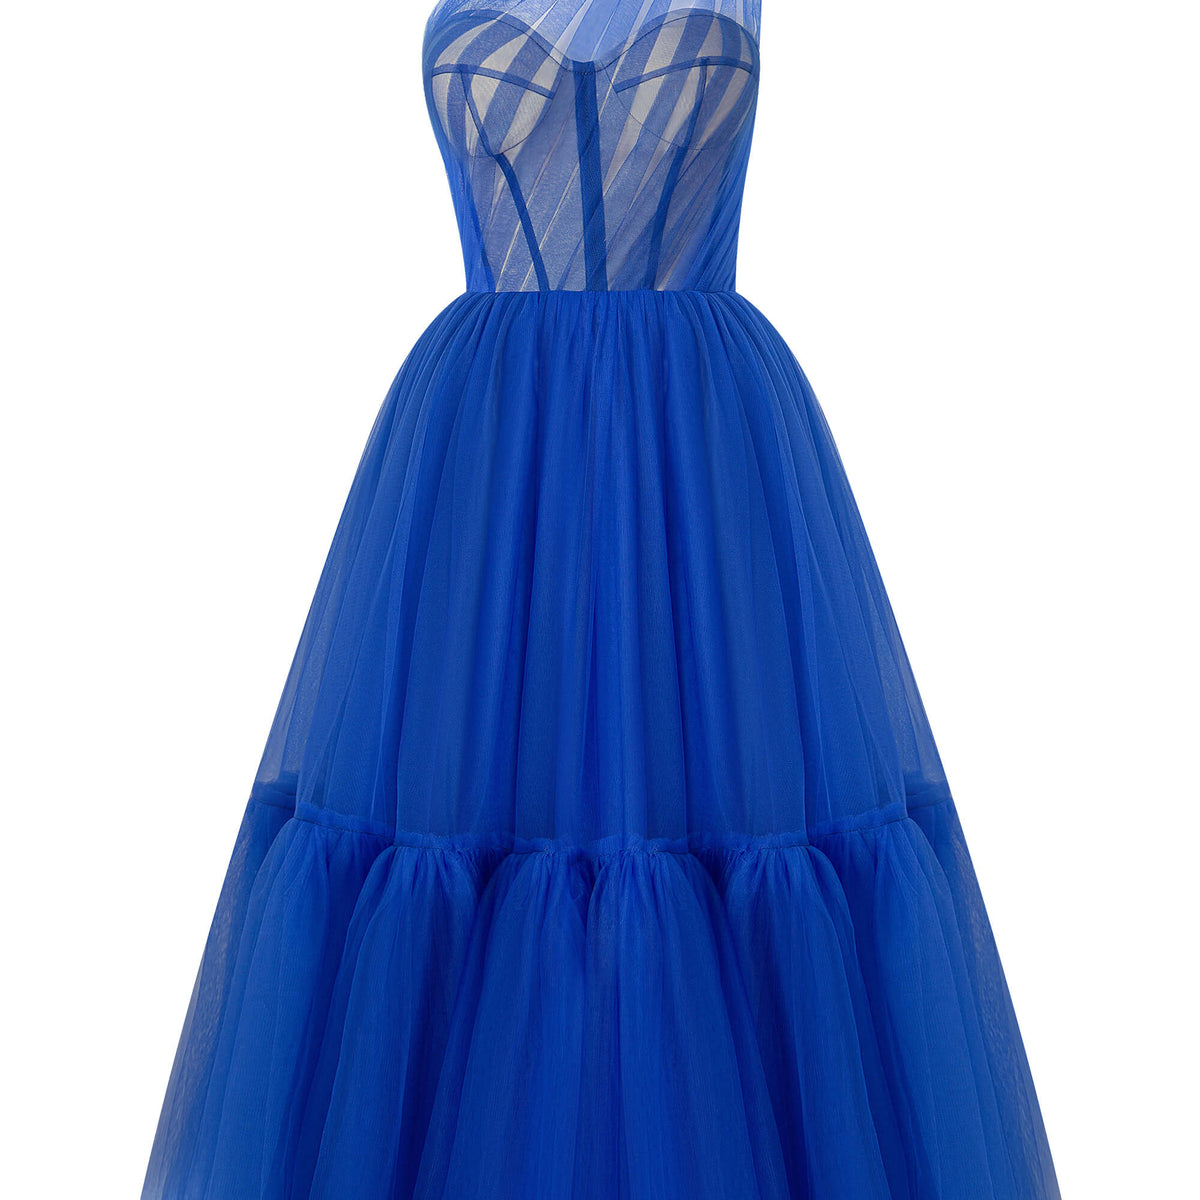 Light Blue One-Shoulder Cocktail Tulle Dress  Tulle dress, One shoulder  cocktail dress, Puffy tulle skirt